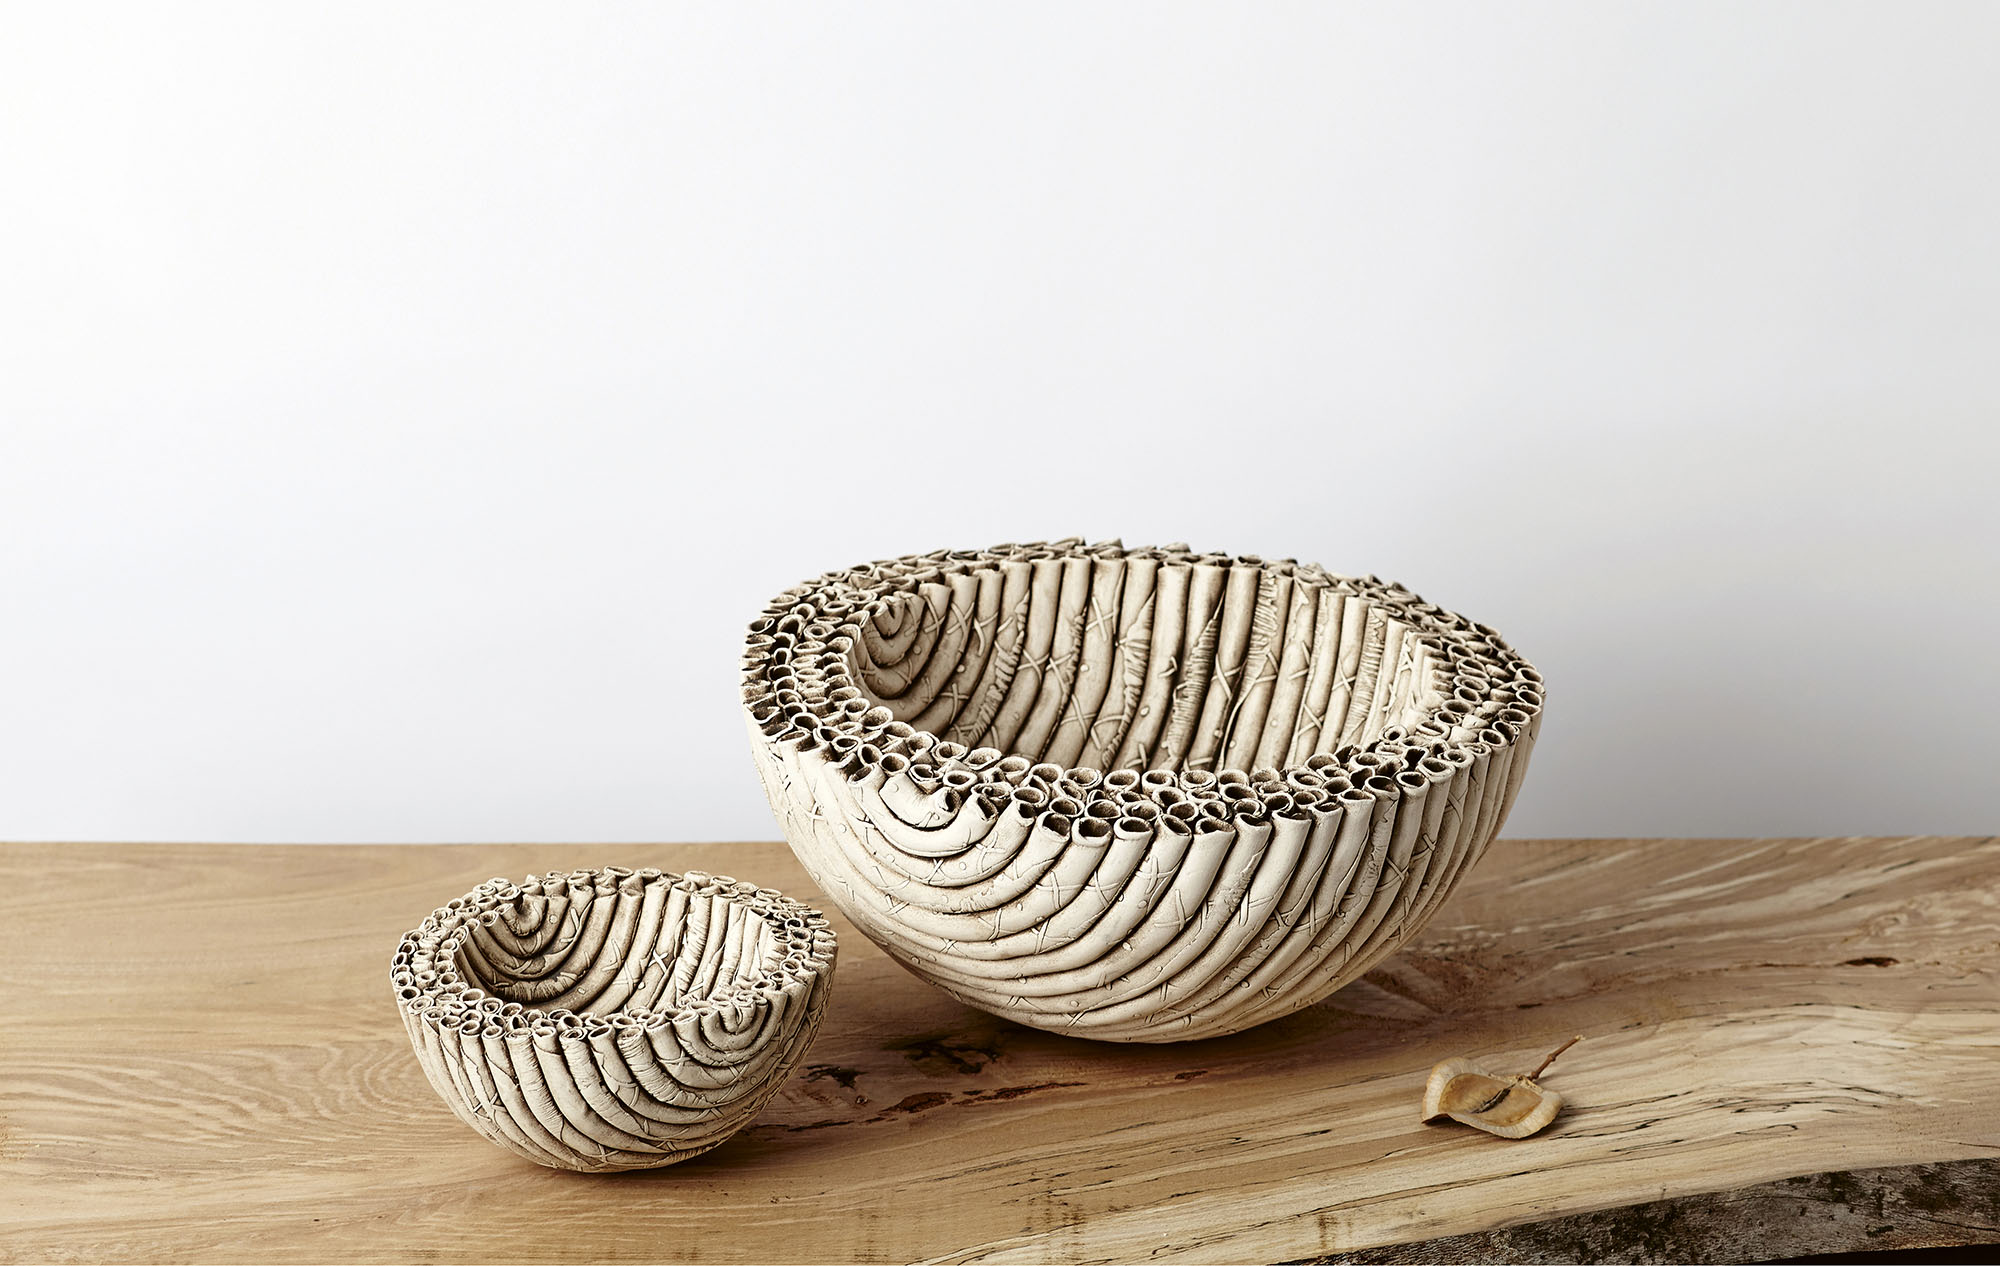 Lisa Ellul's ceramic bowls